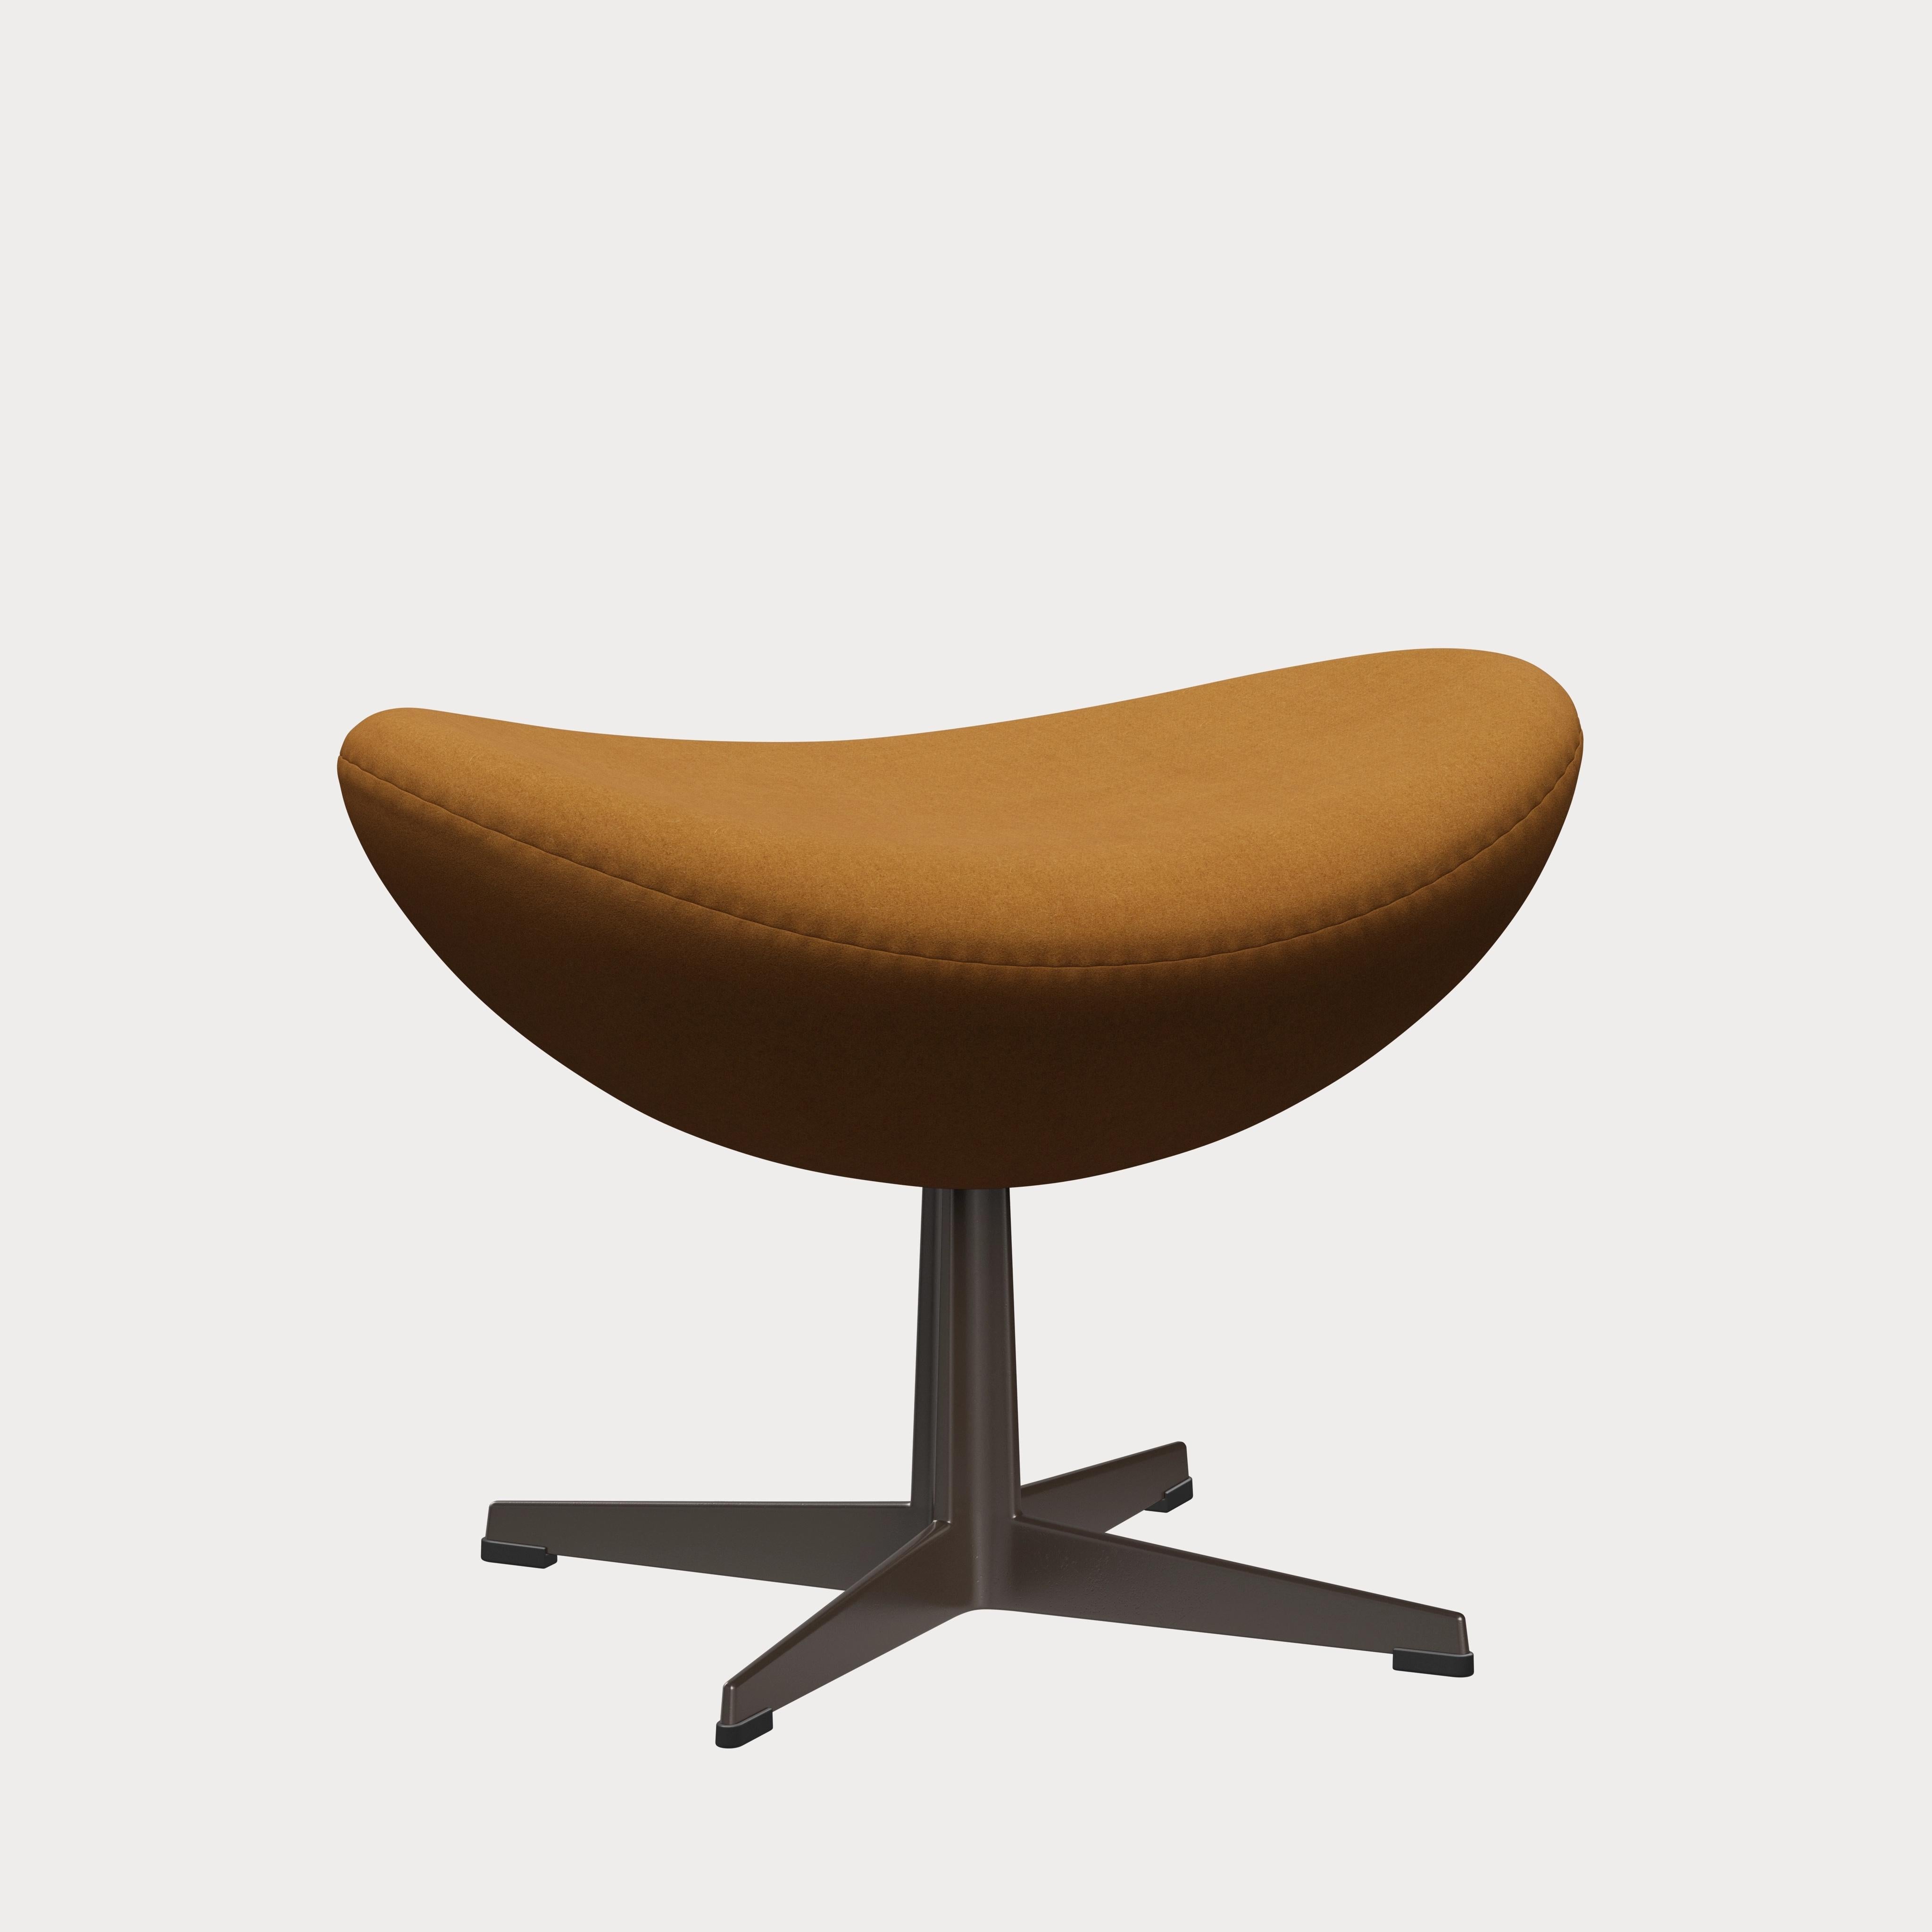 Contemporary Arne Jacobsen 'Egg' Footstool for Fritz Hansen in Fabric Upholstery (Cat. 2) For Sale